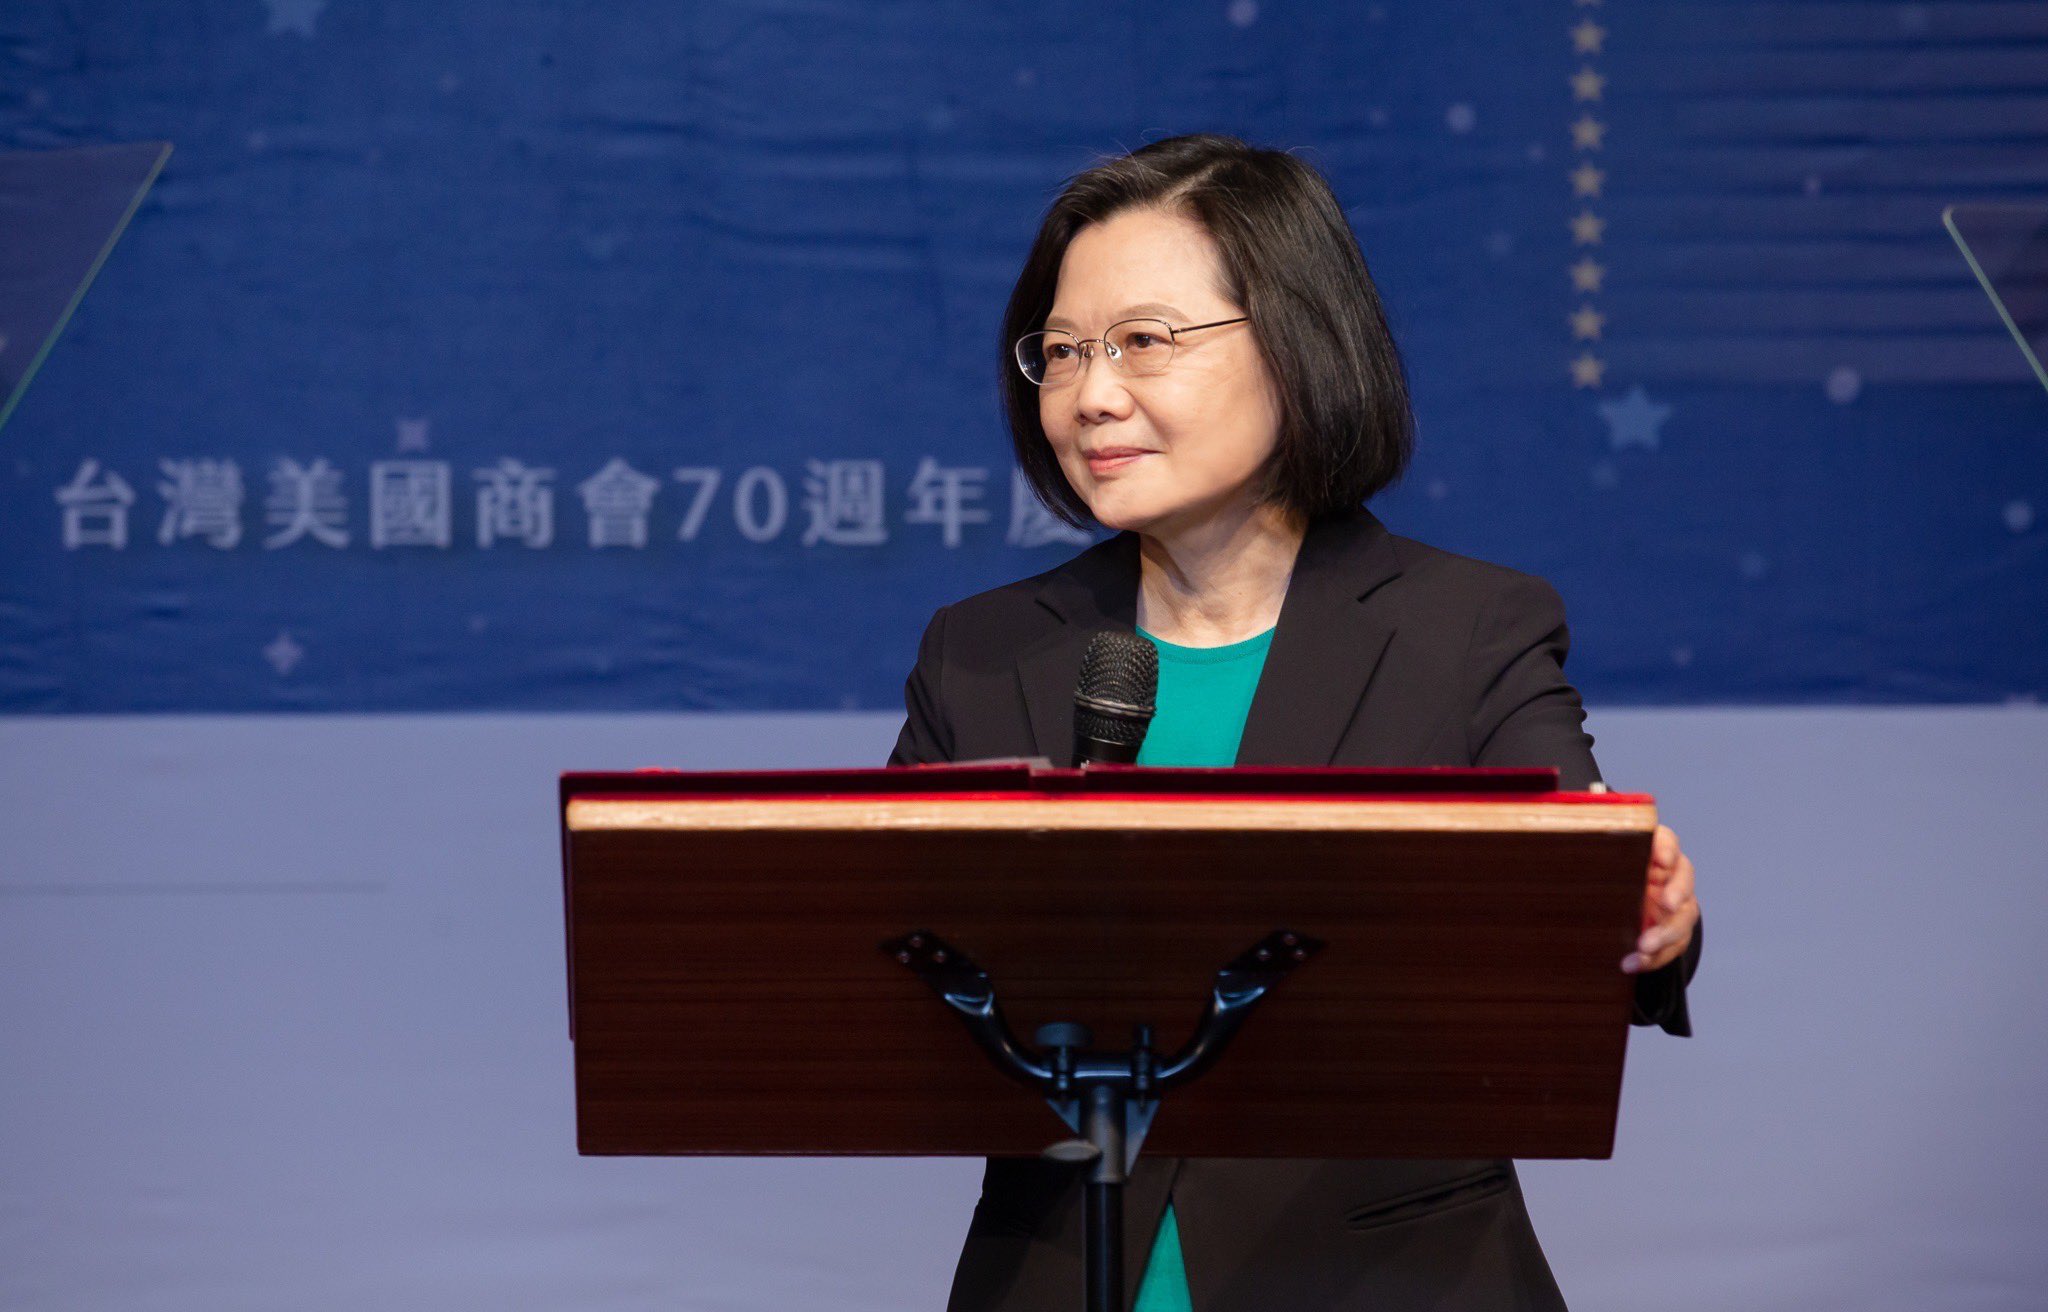 L'amenaça a la presidenta de Taiwan: "Si fossis catalana, series a la presó"